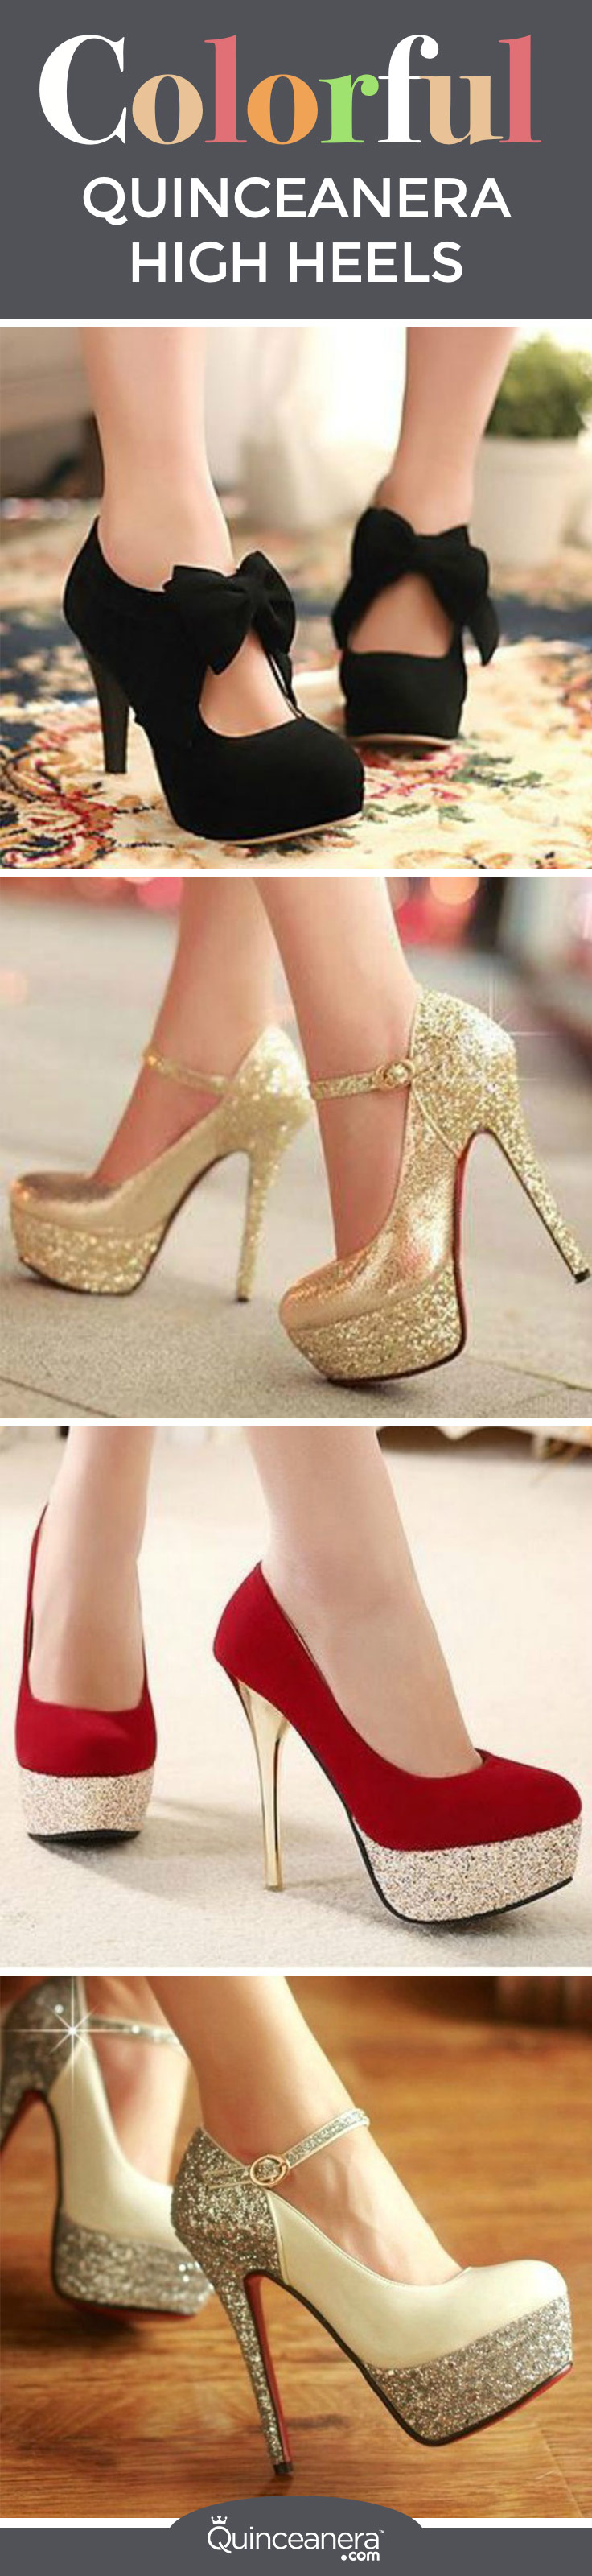 colorful-heels